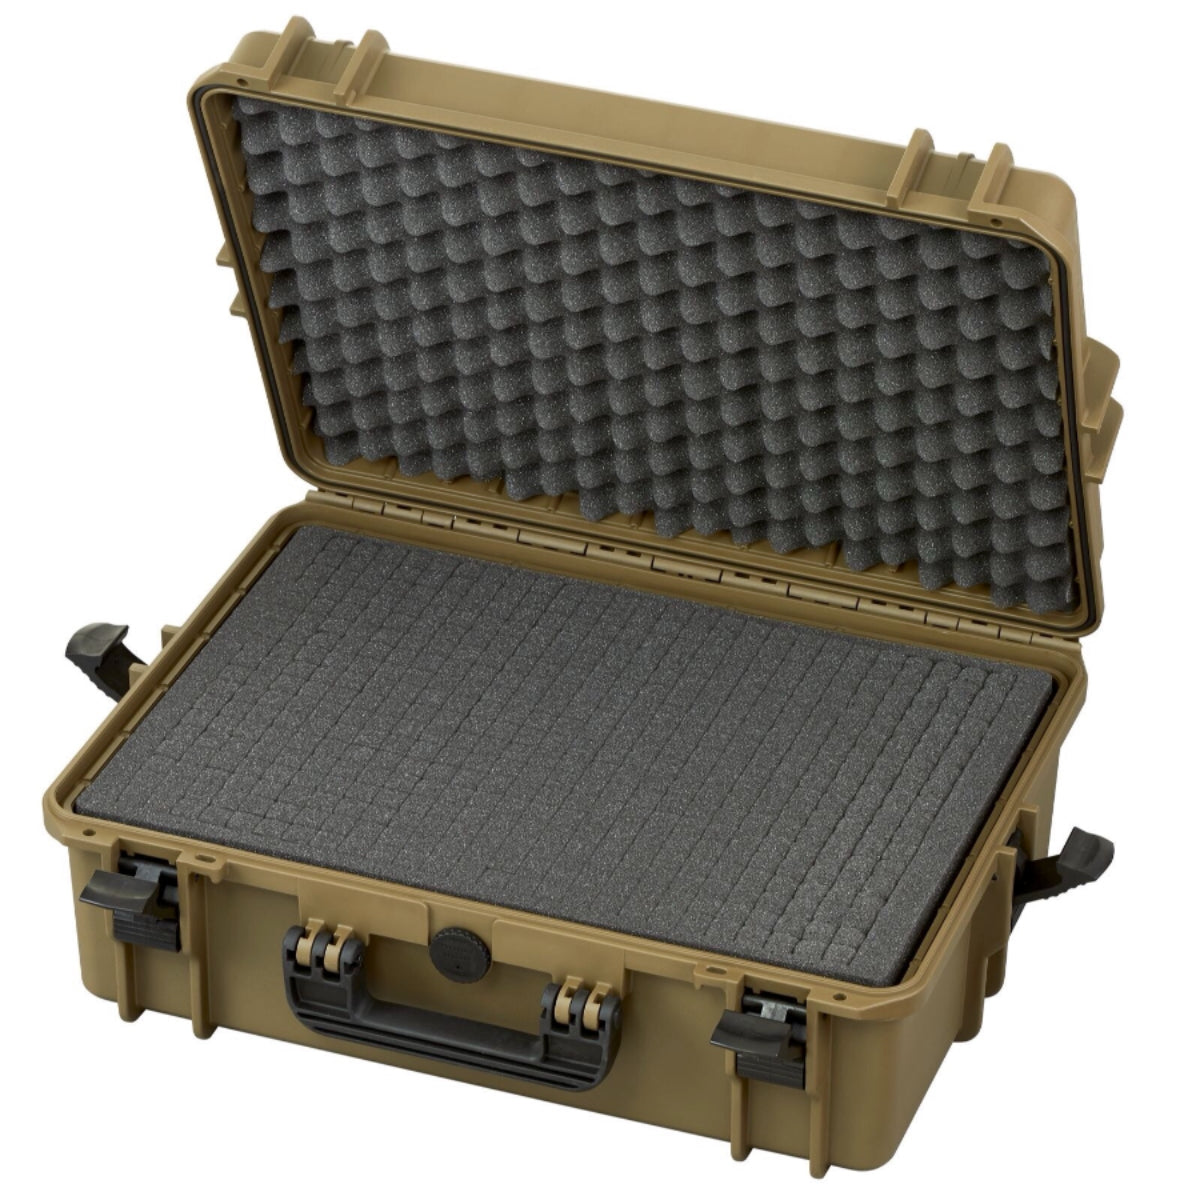 SP PRO 505S Sahara Carry Case, Cubed Foam, ID: L500xW350xH194mm